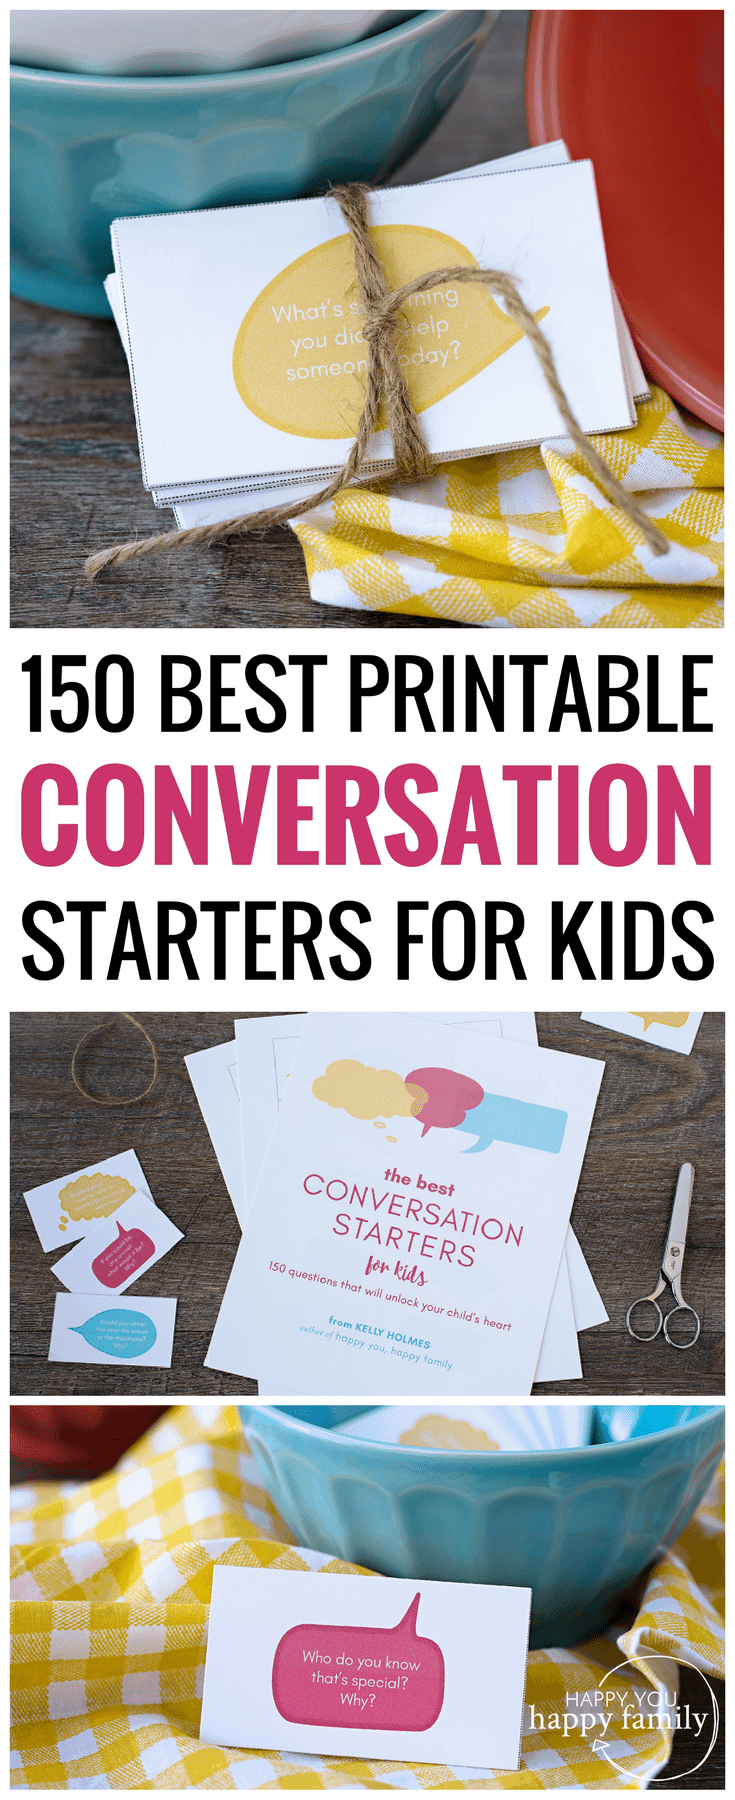 Conversation starters for kids